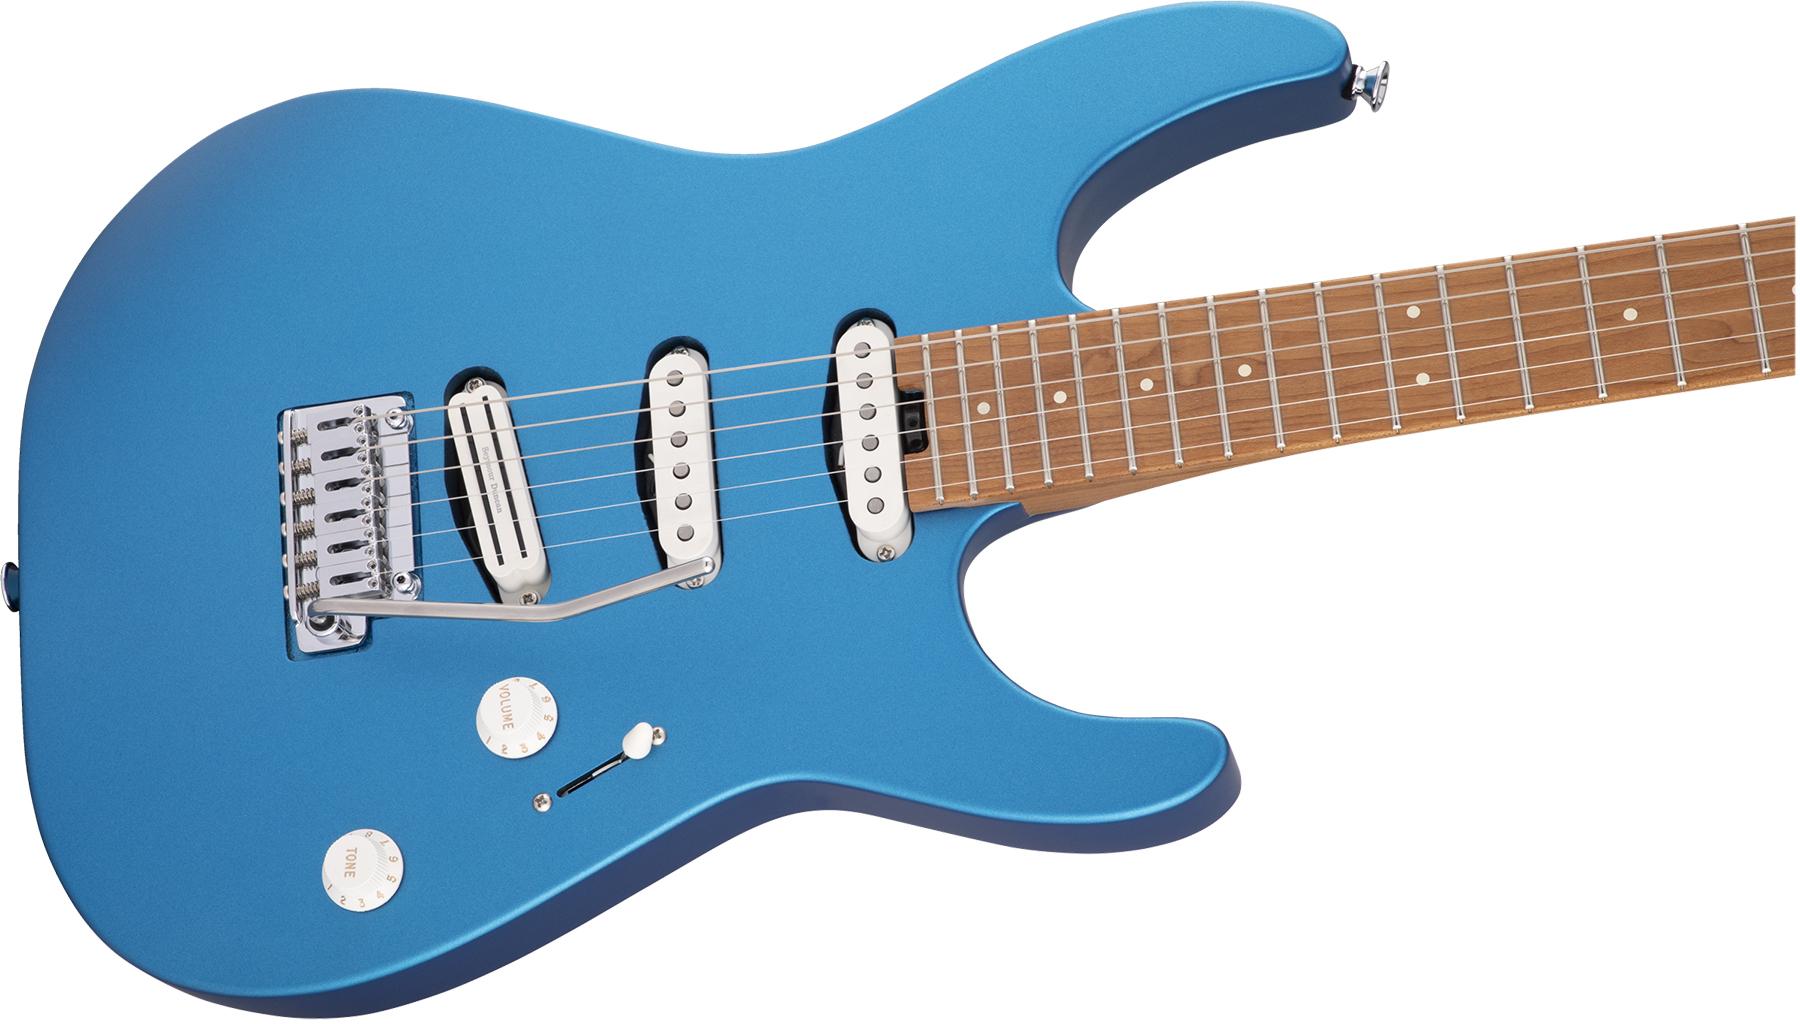 Charvel Dinky Dk22 Sss 2pt Cm Pro-mod 3s Seymour Duncan Mn - Electric Blue - Metal electric guitar - Variation 2